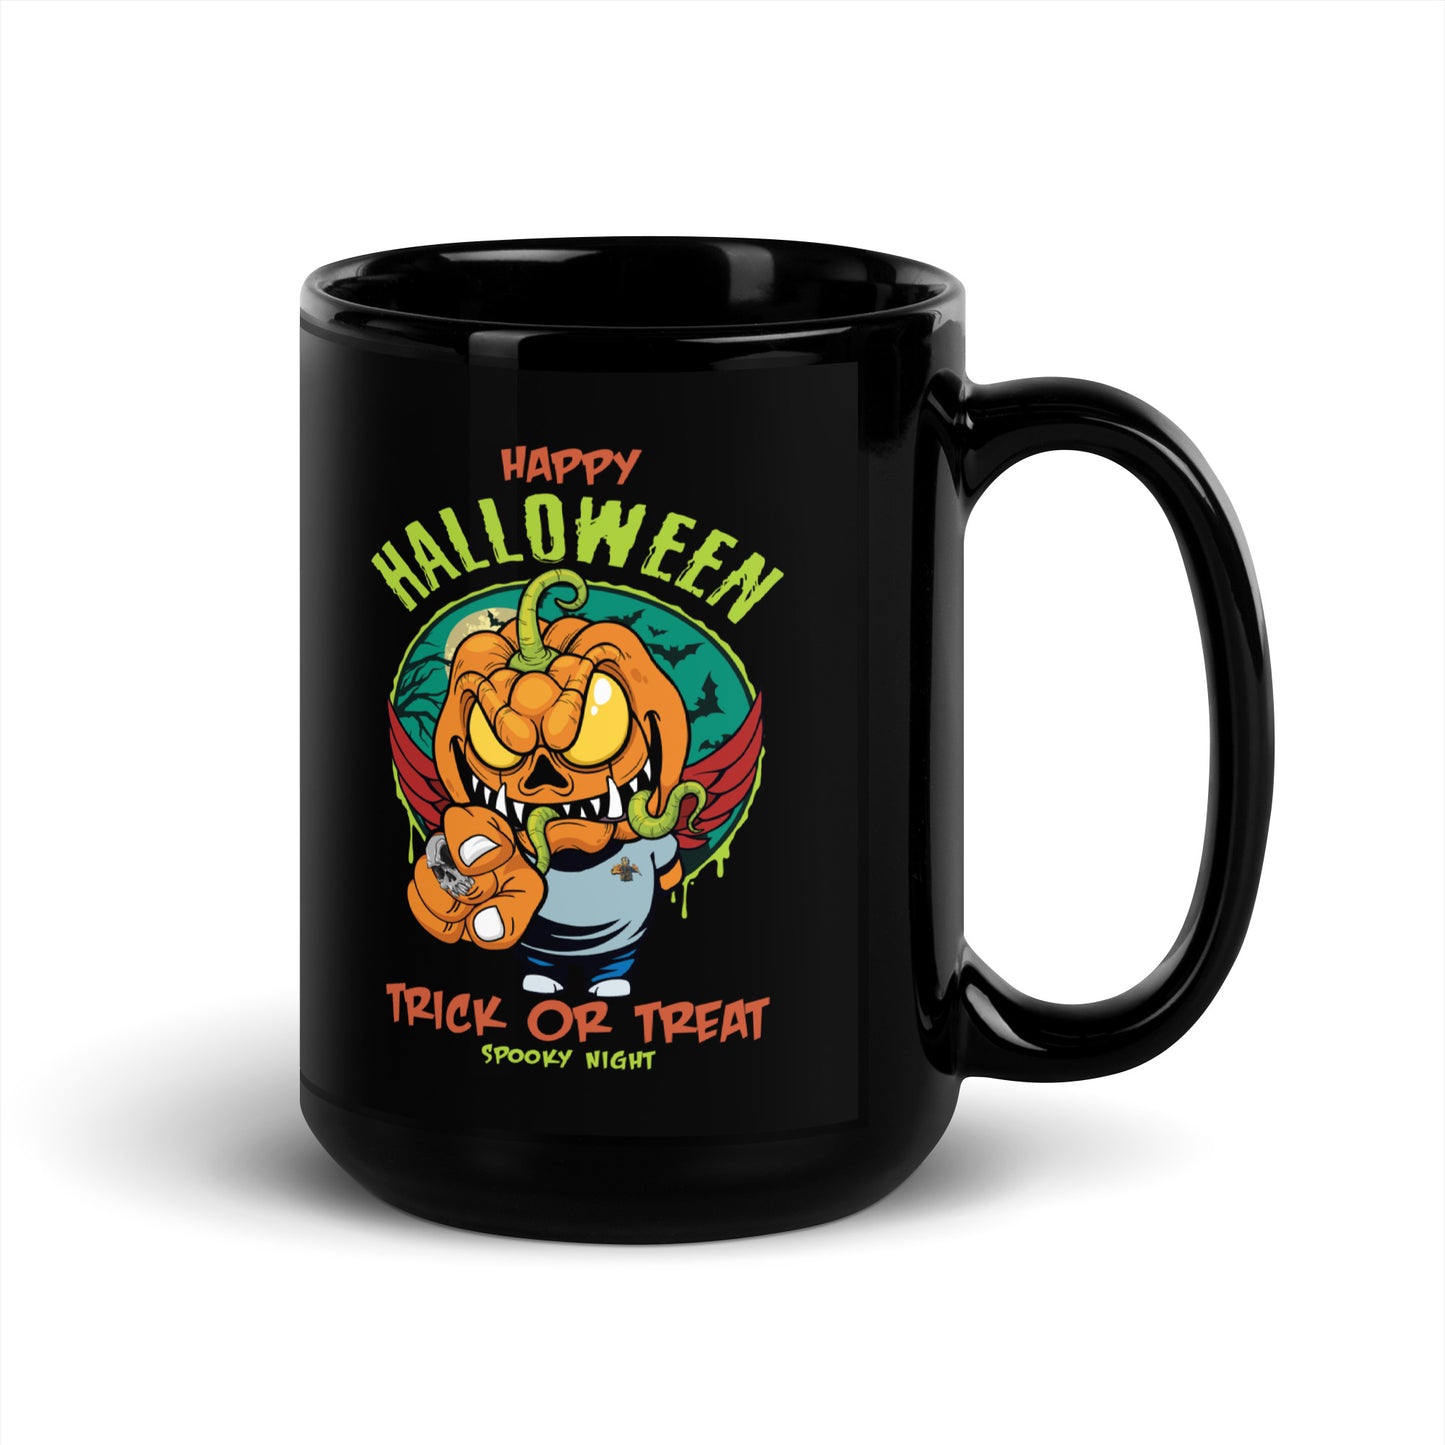 Spooky Night Coffee Mug